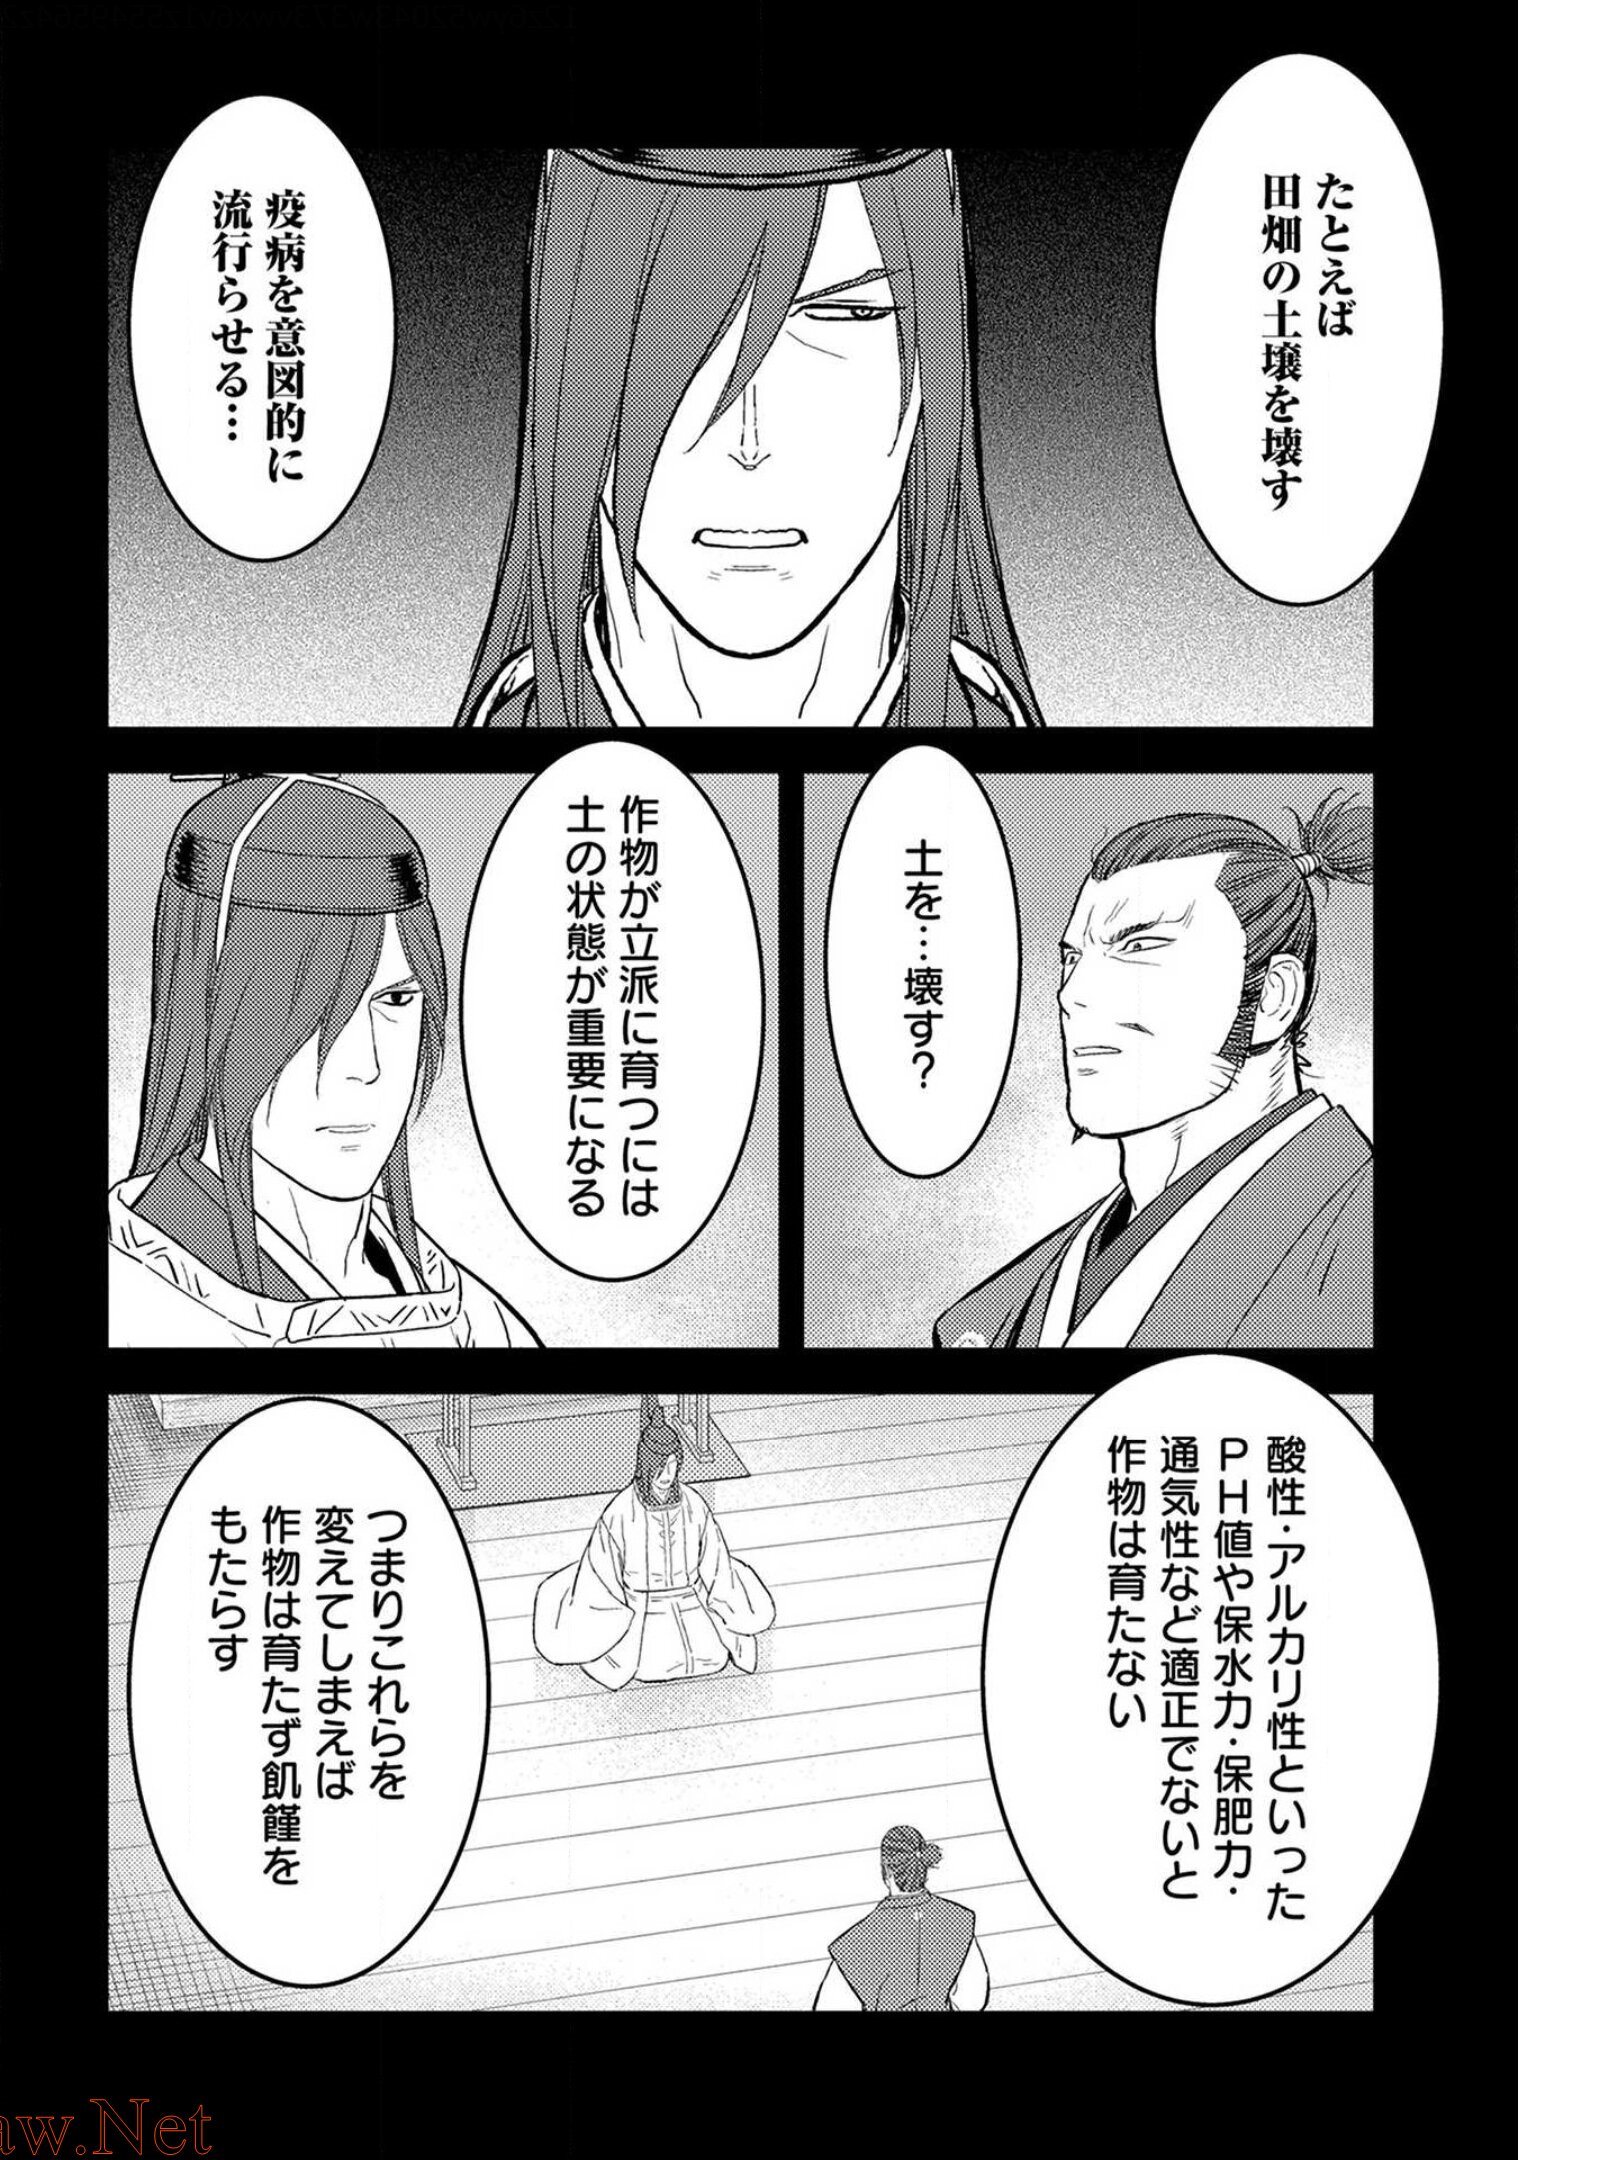 Sengoku Komachi Kuroutan - Chapter 40 - Page 4